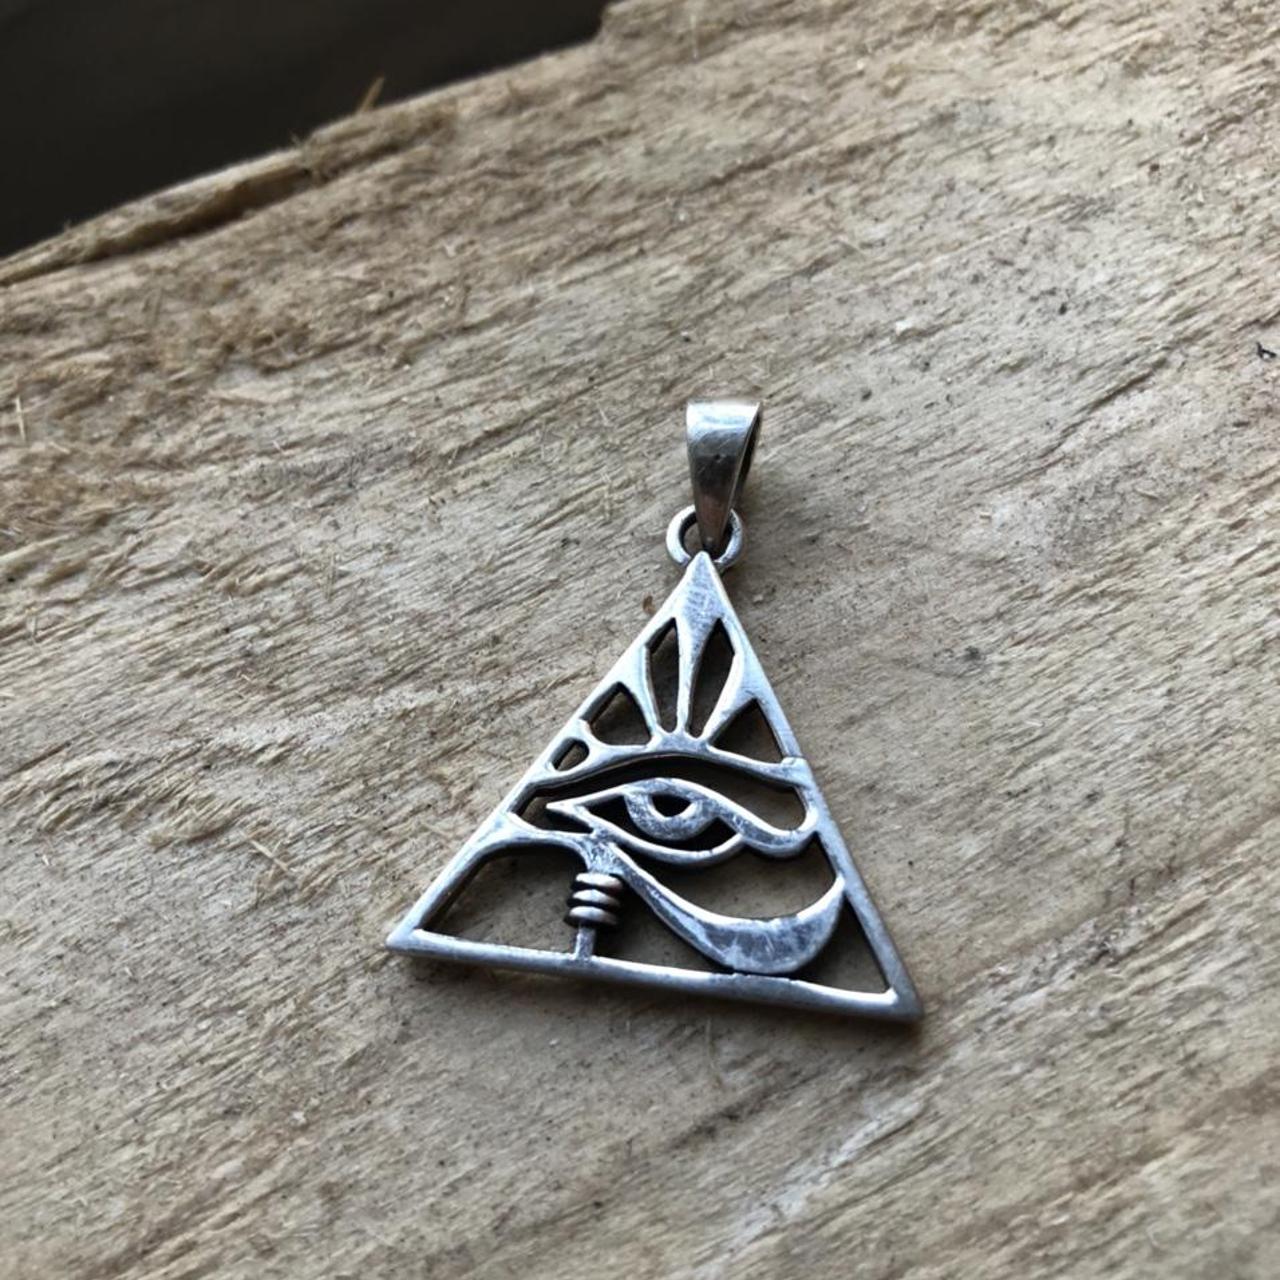 Product Image 2 - Triangular eye pendant 

925 silver

Chain